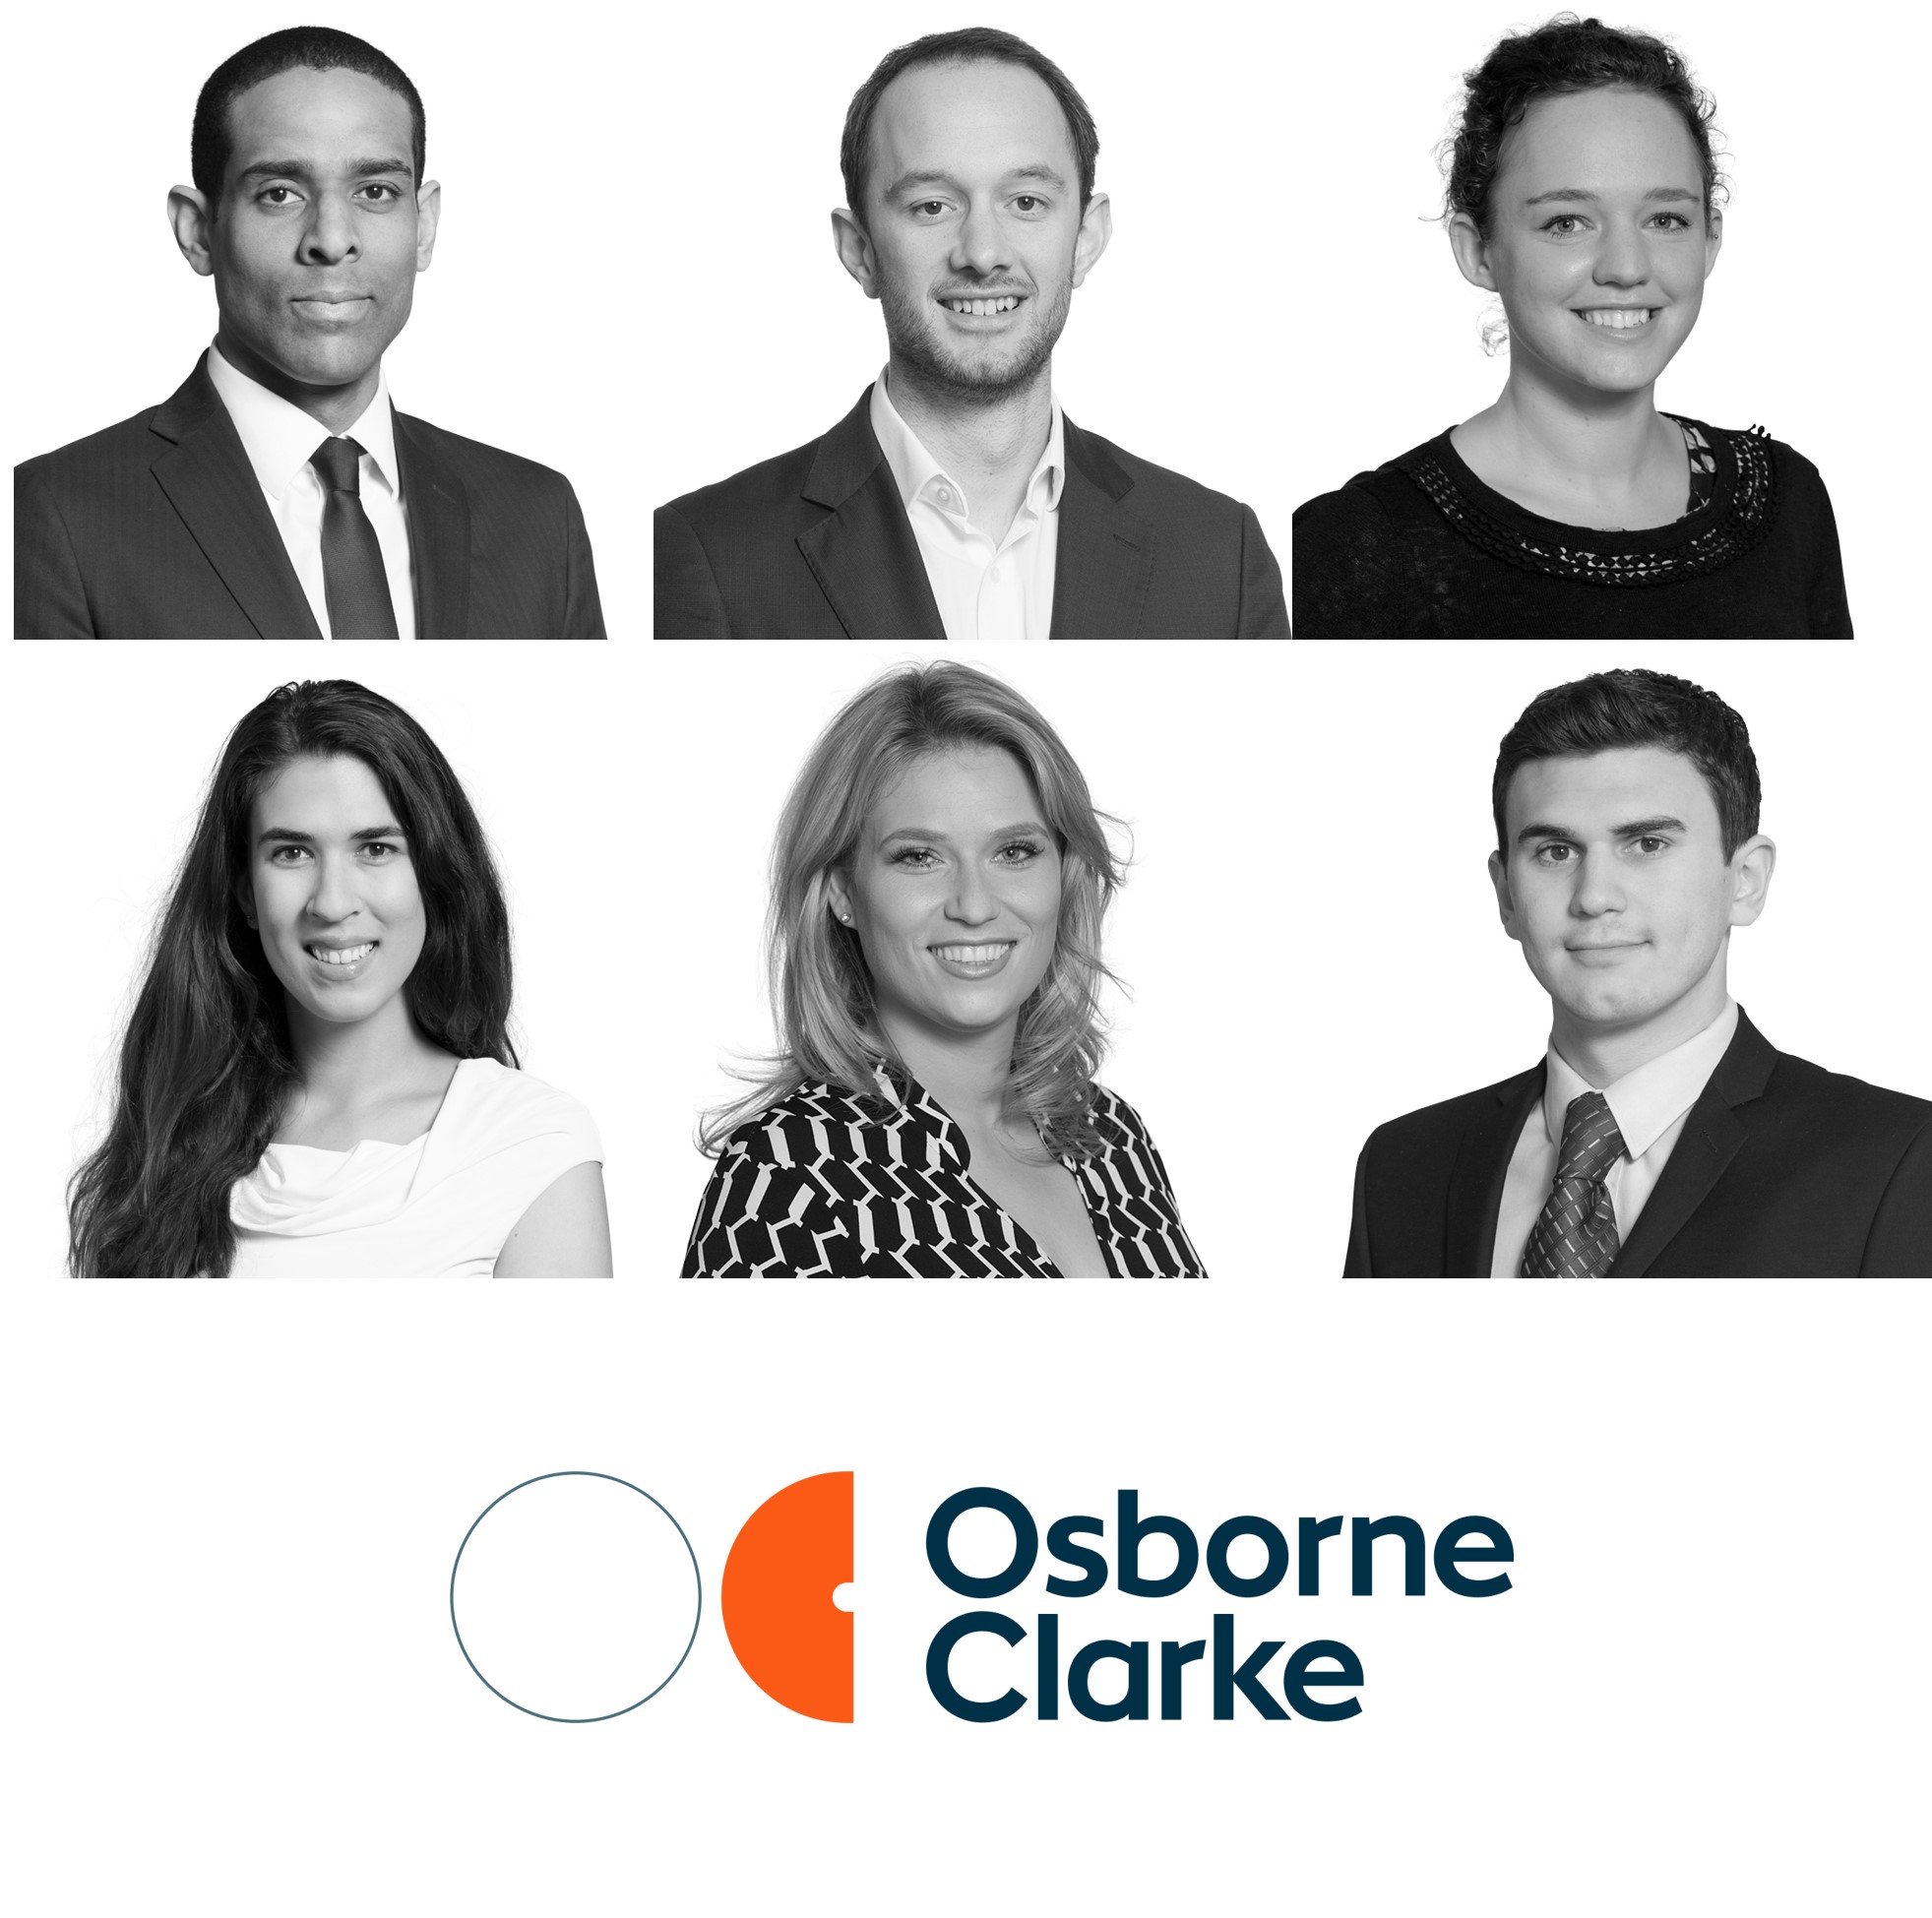 Osborne Clarke's six new UK Partners